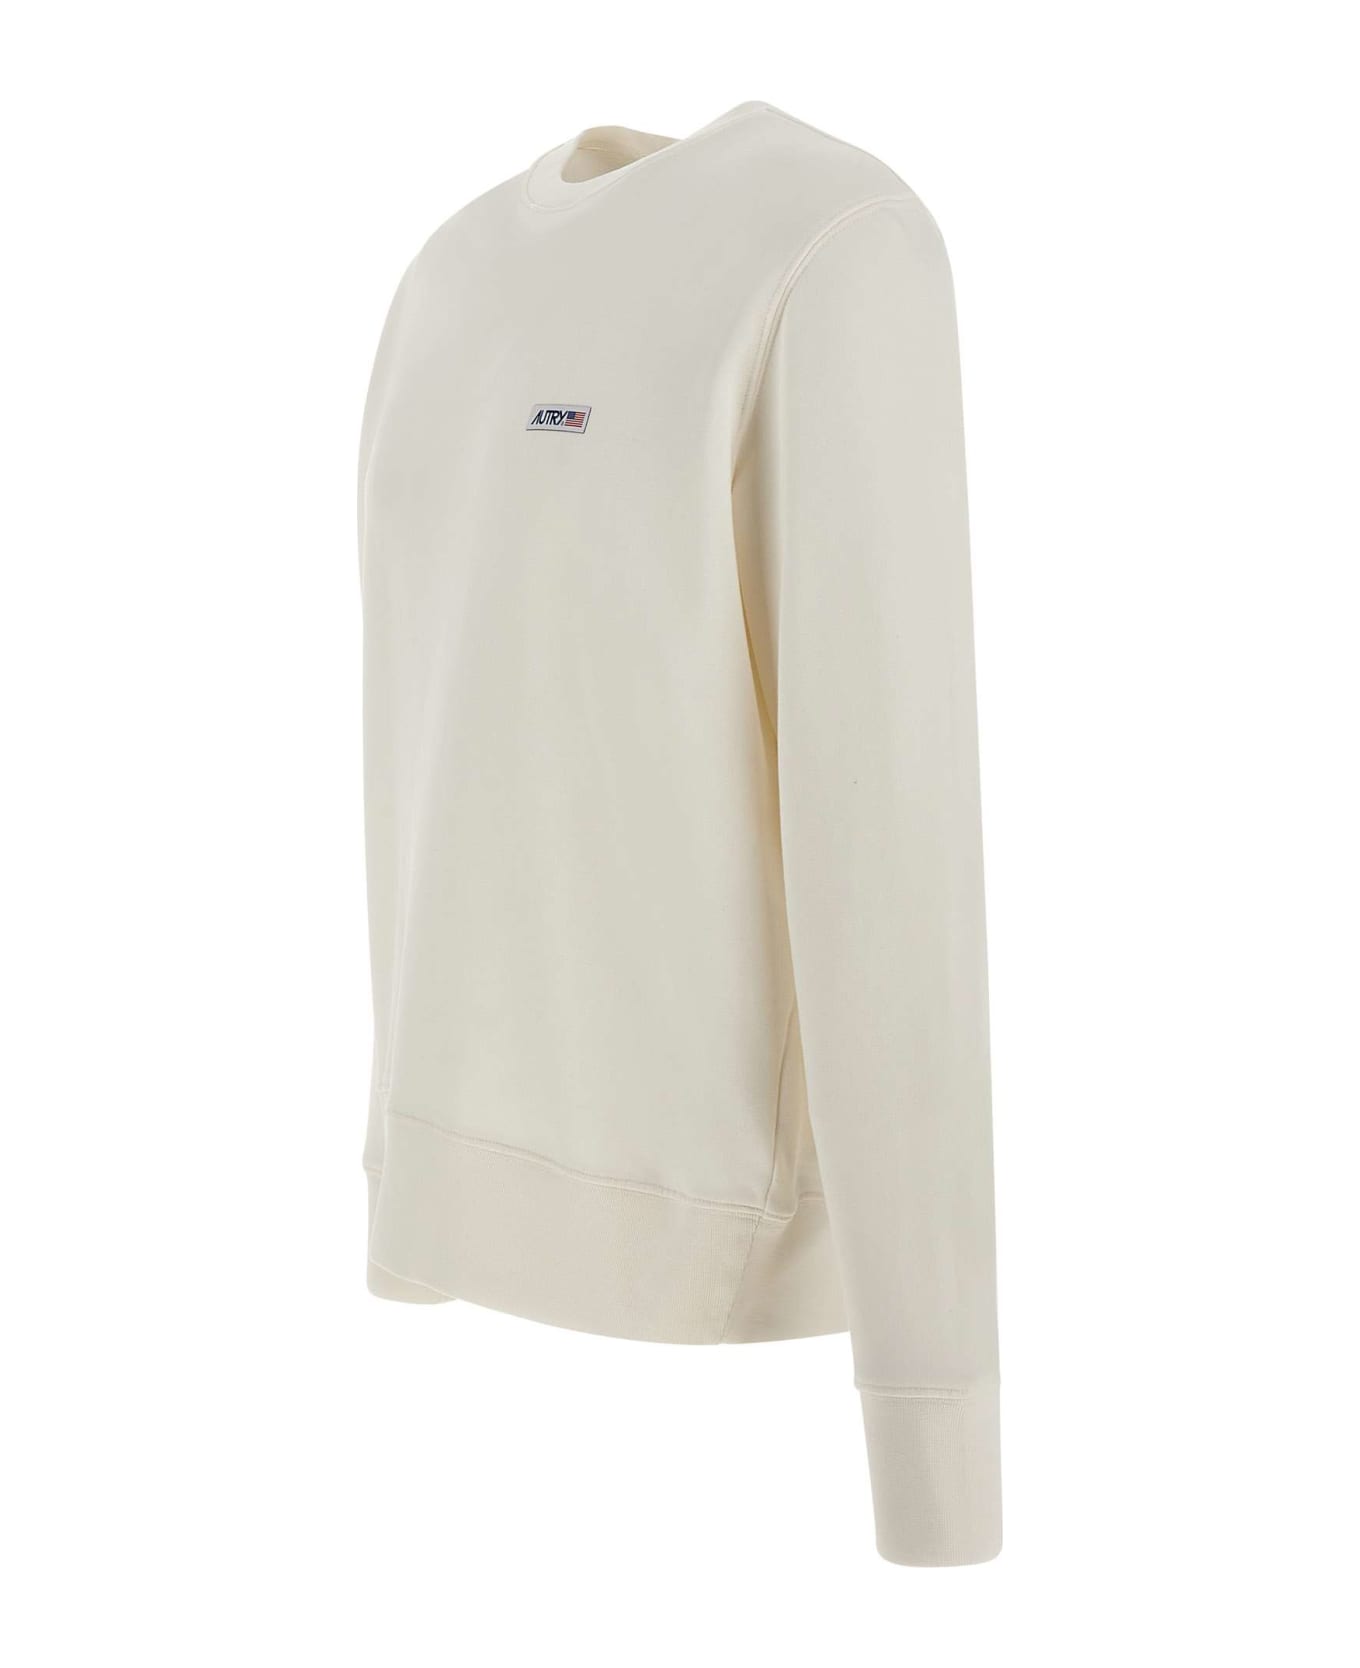 Autry 'main Man Apparel' Cotton Sweatshirt - WHITE